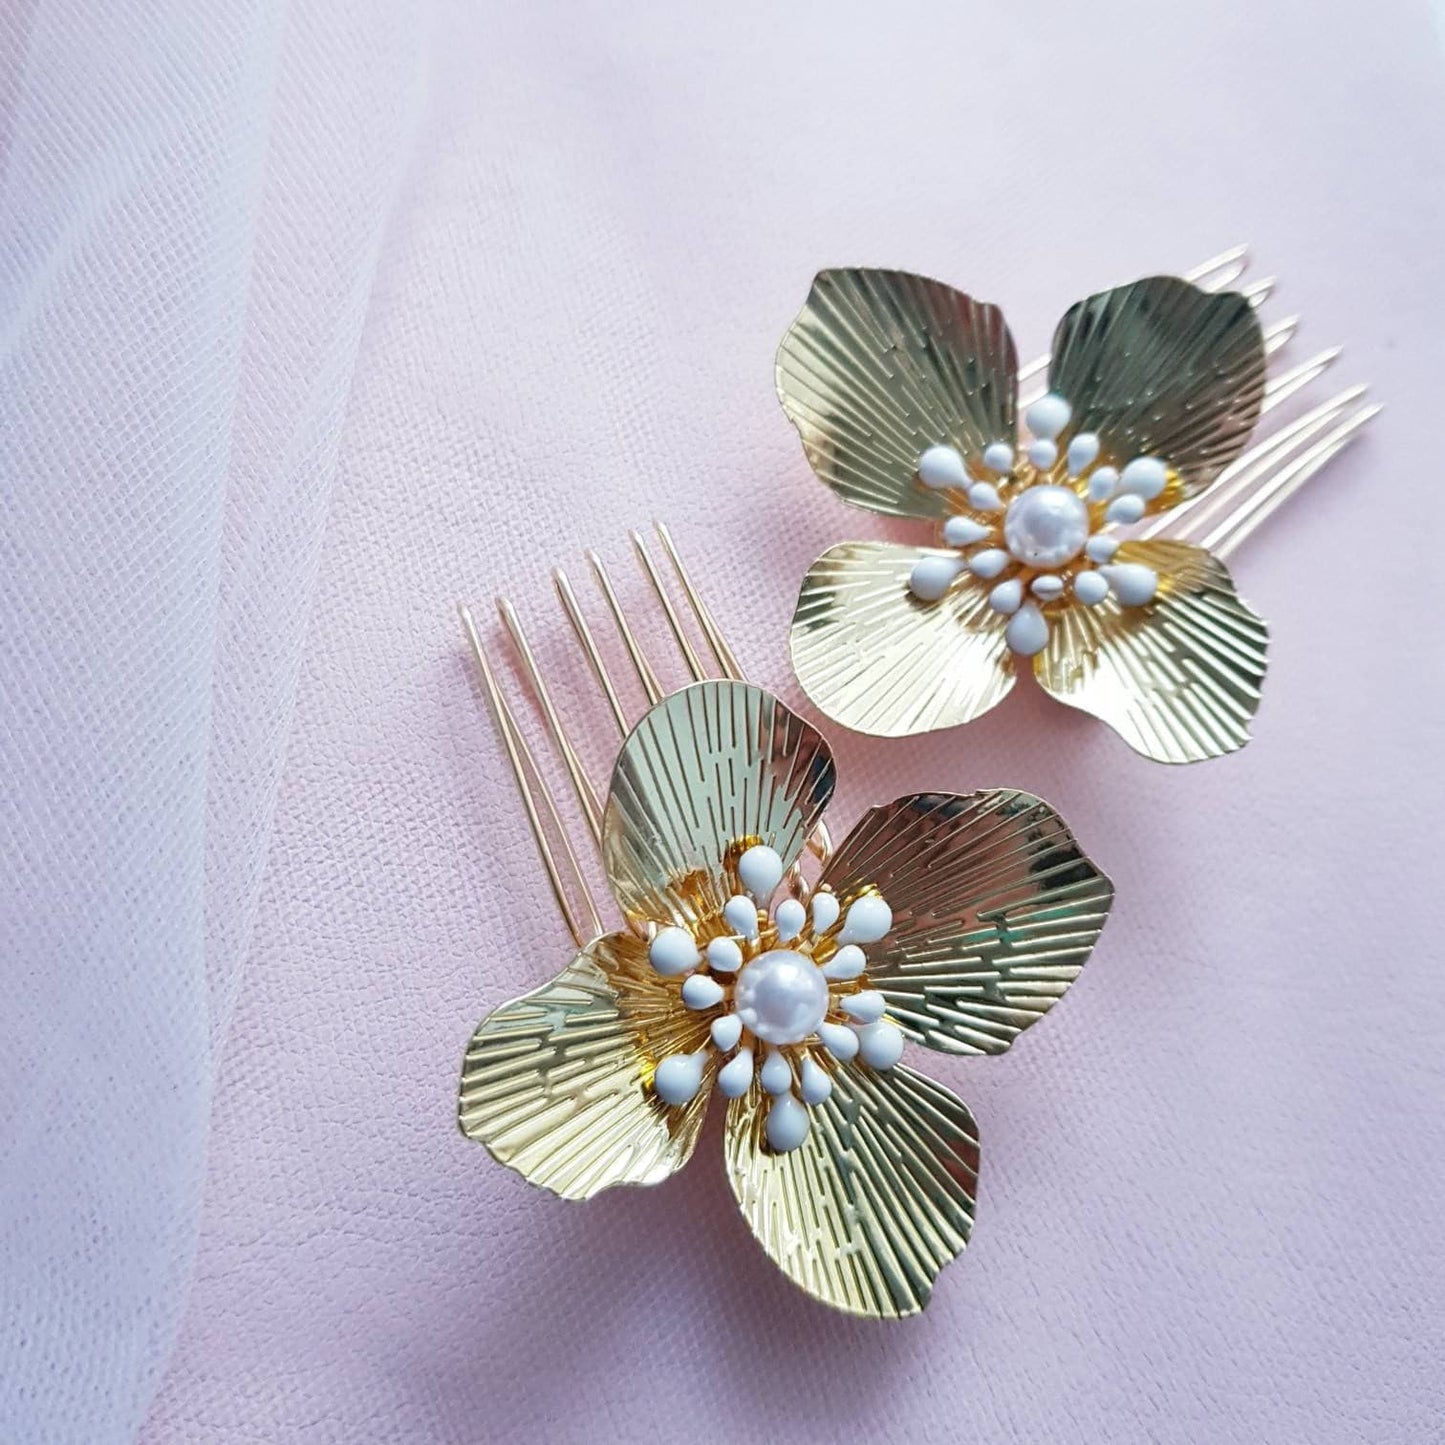 PÉTALES Haircombs Set of 2 Silver Gold bridal wedding hairpins White Flower hair accessories Australia fascinate handmade clips bridesmaids